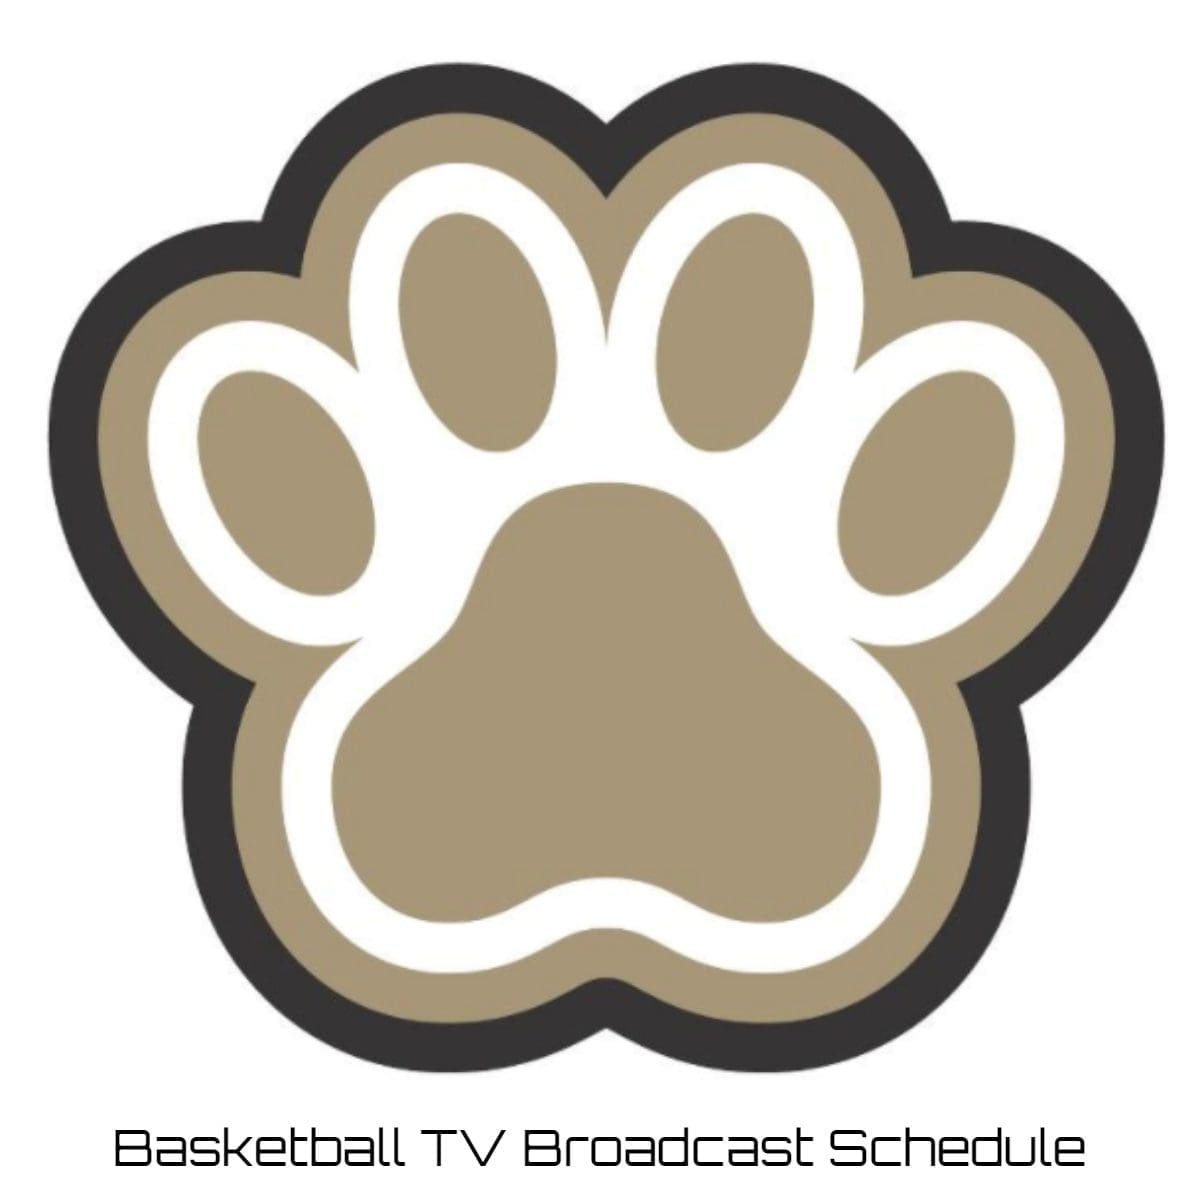 Bryant Bulldogs Basketball TV Broadcast Schedule